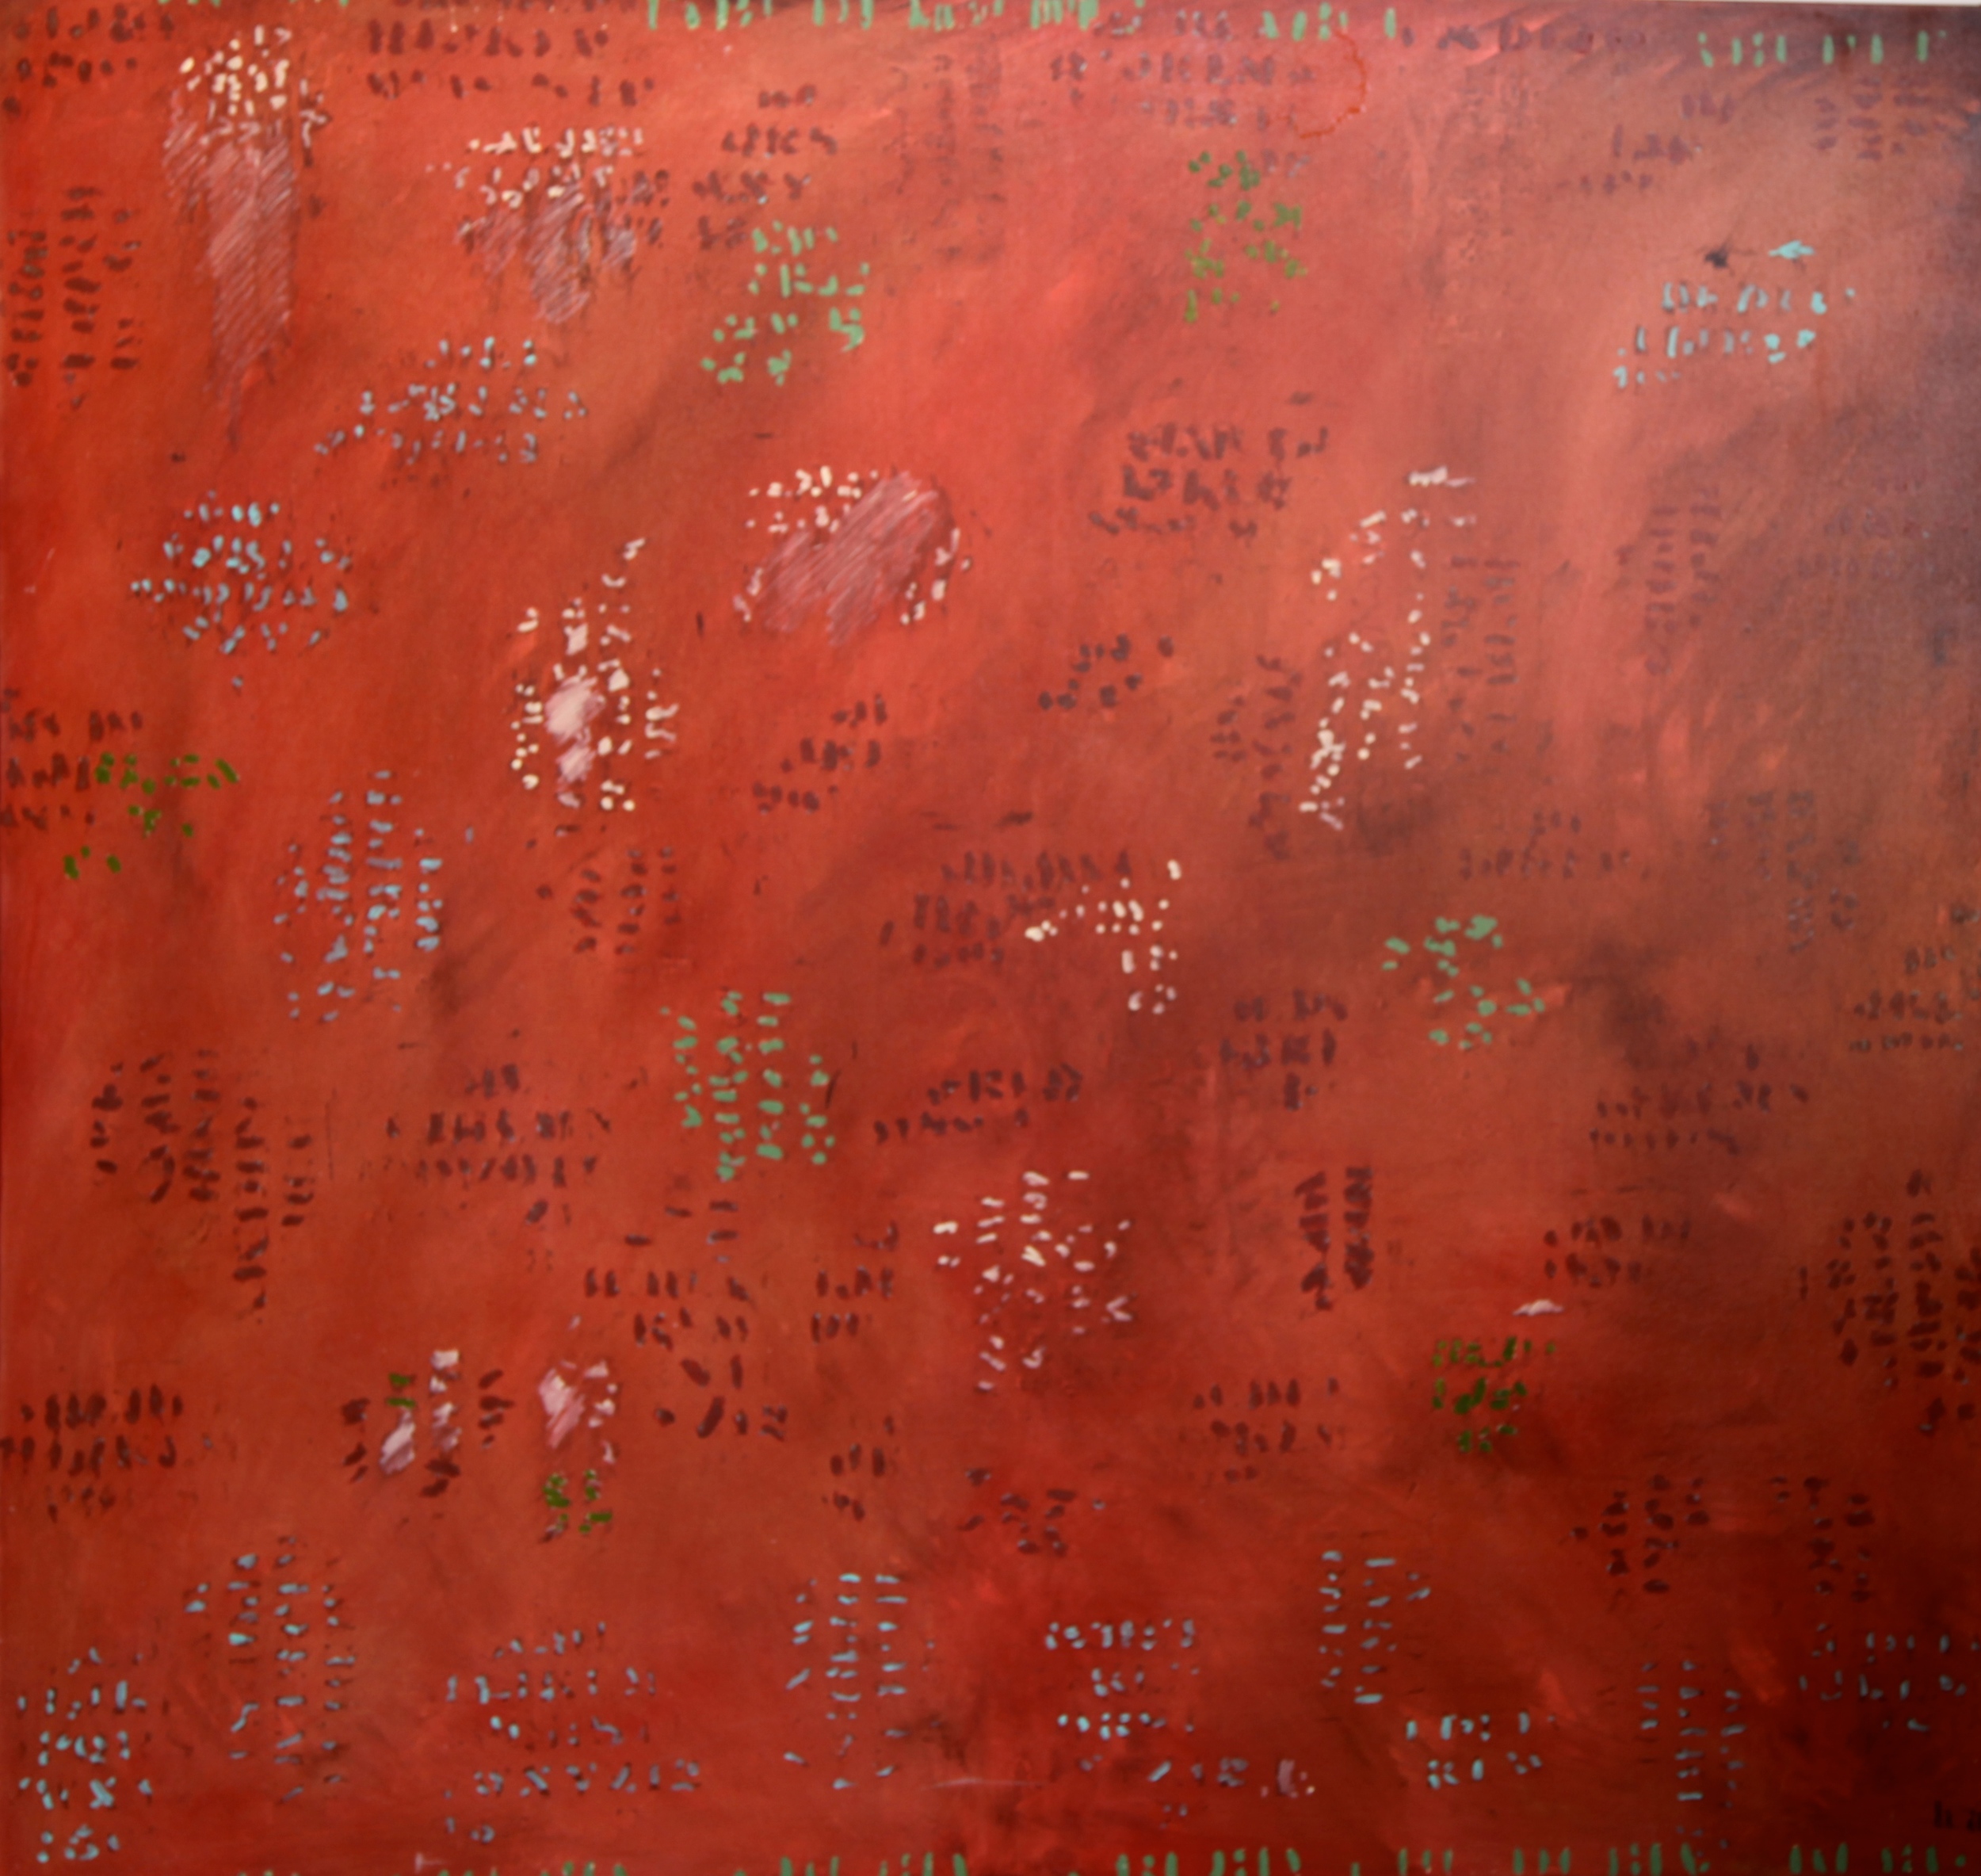   Abiquiu   oil on canvas  48" x 50"  1996  $6,400   